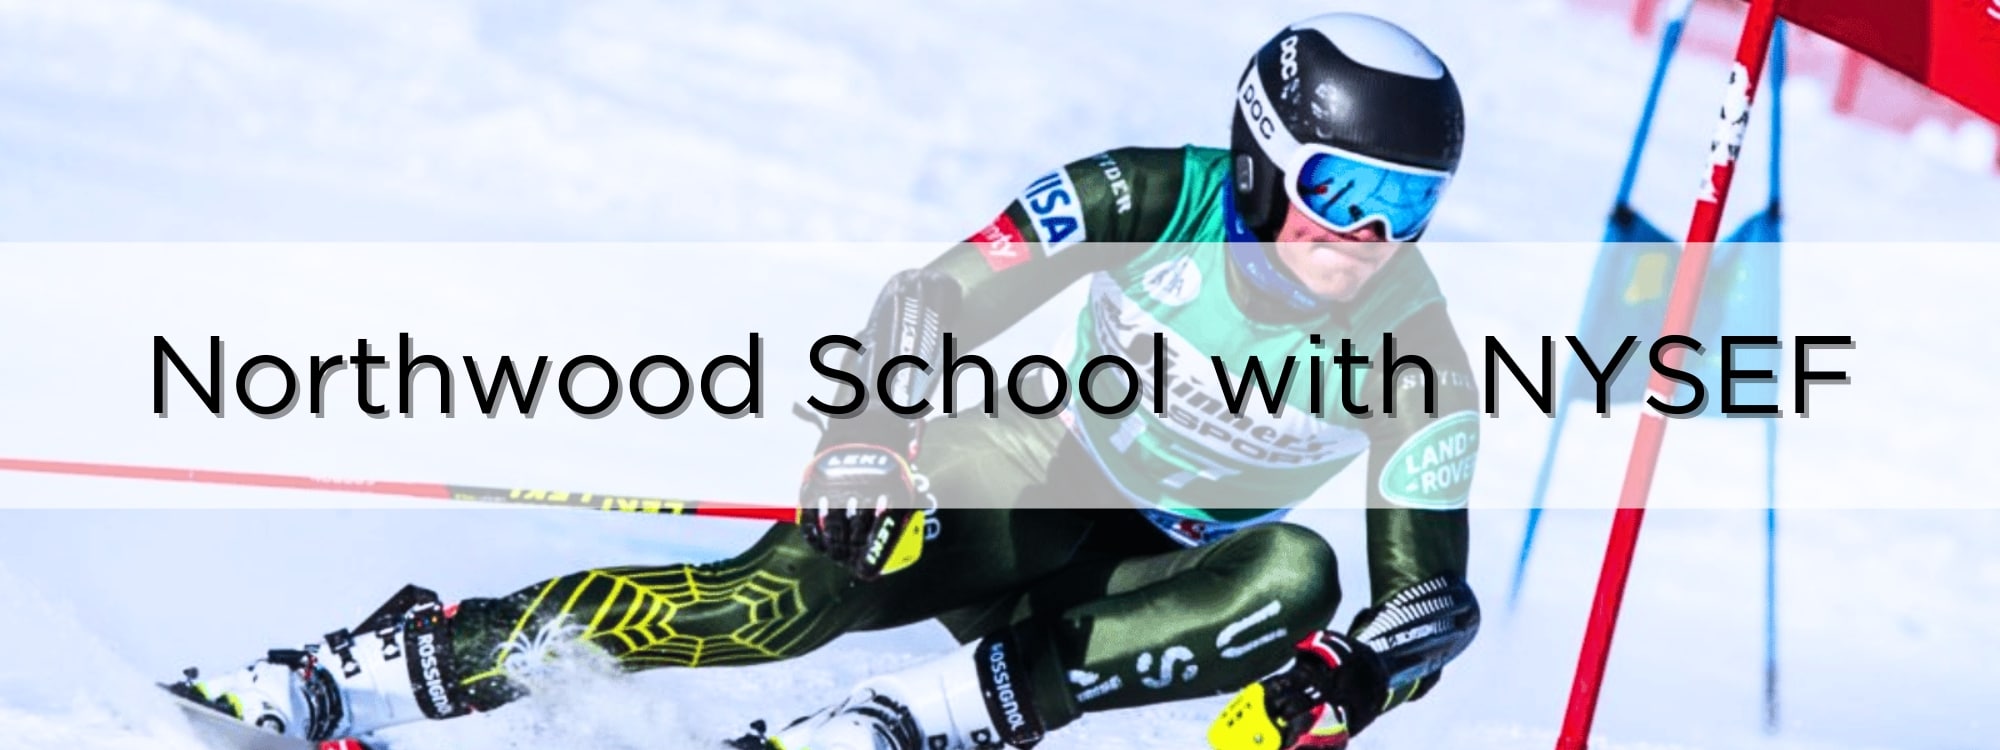 Northwood School with New York Ski Education Foundation (NYSEF) title banner. 